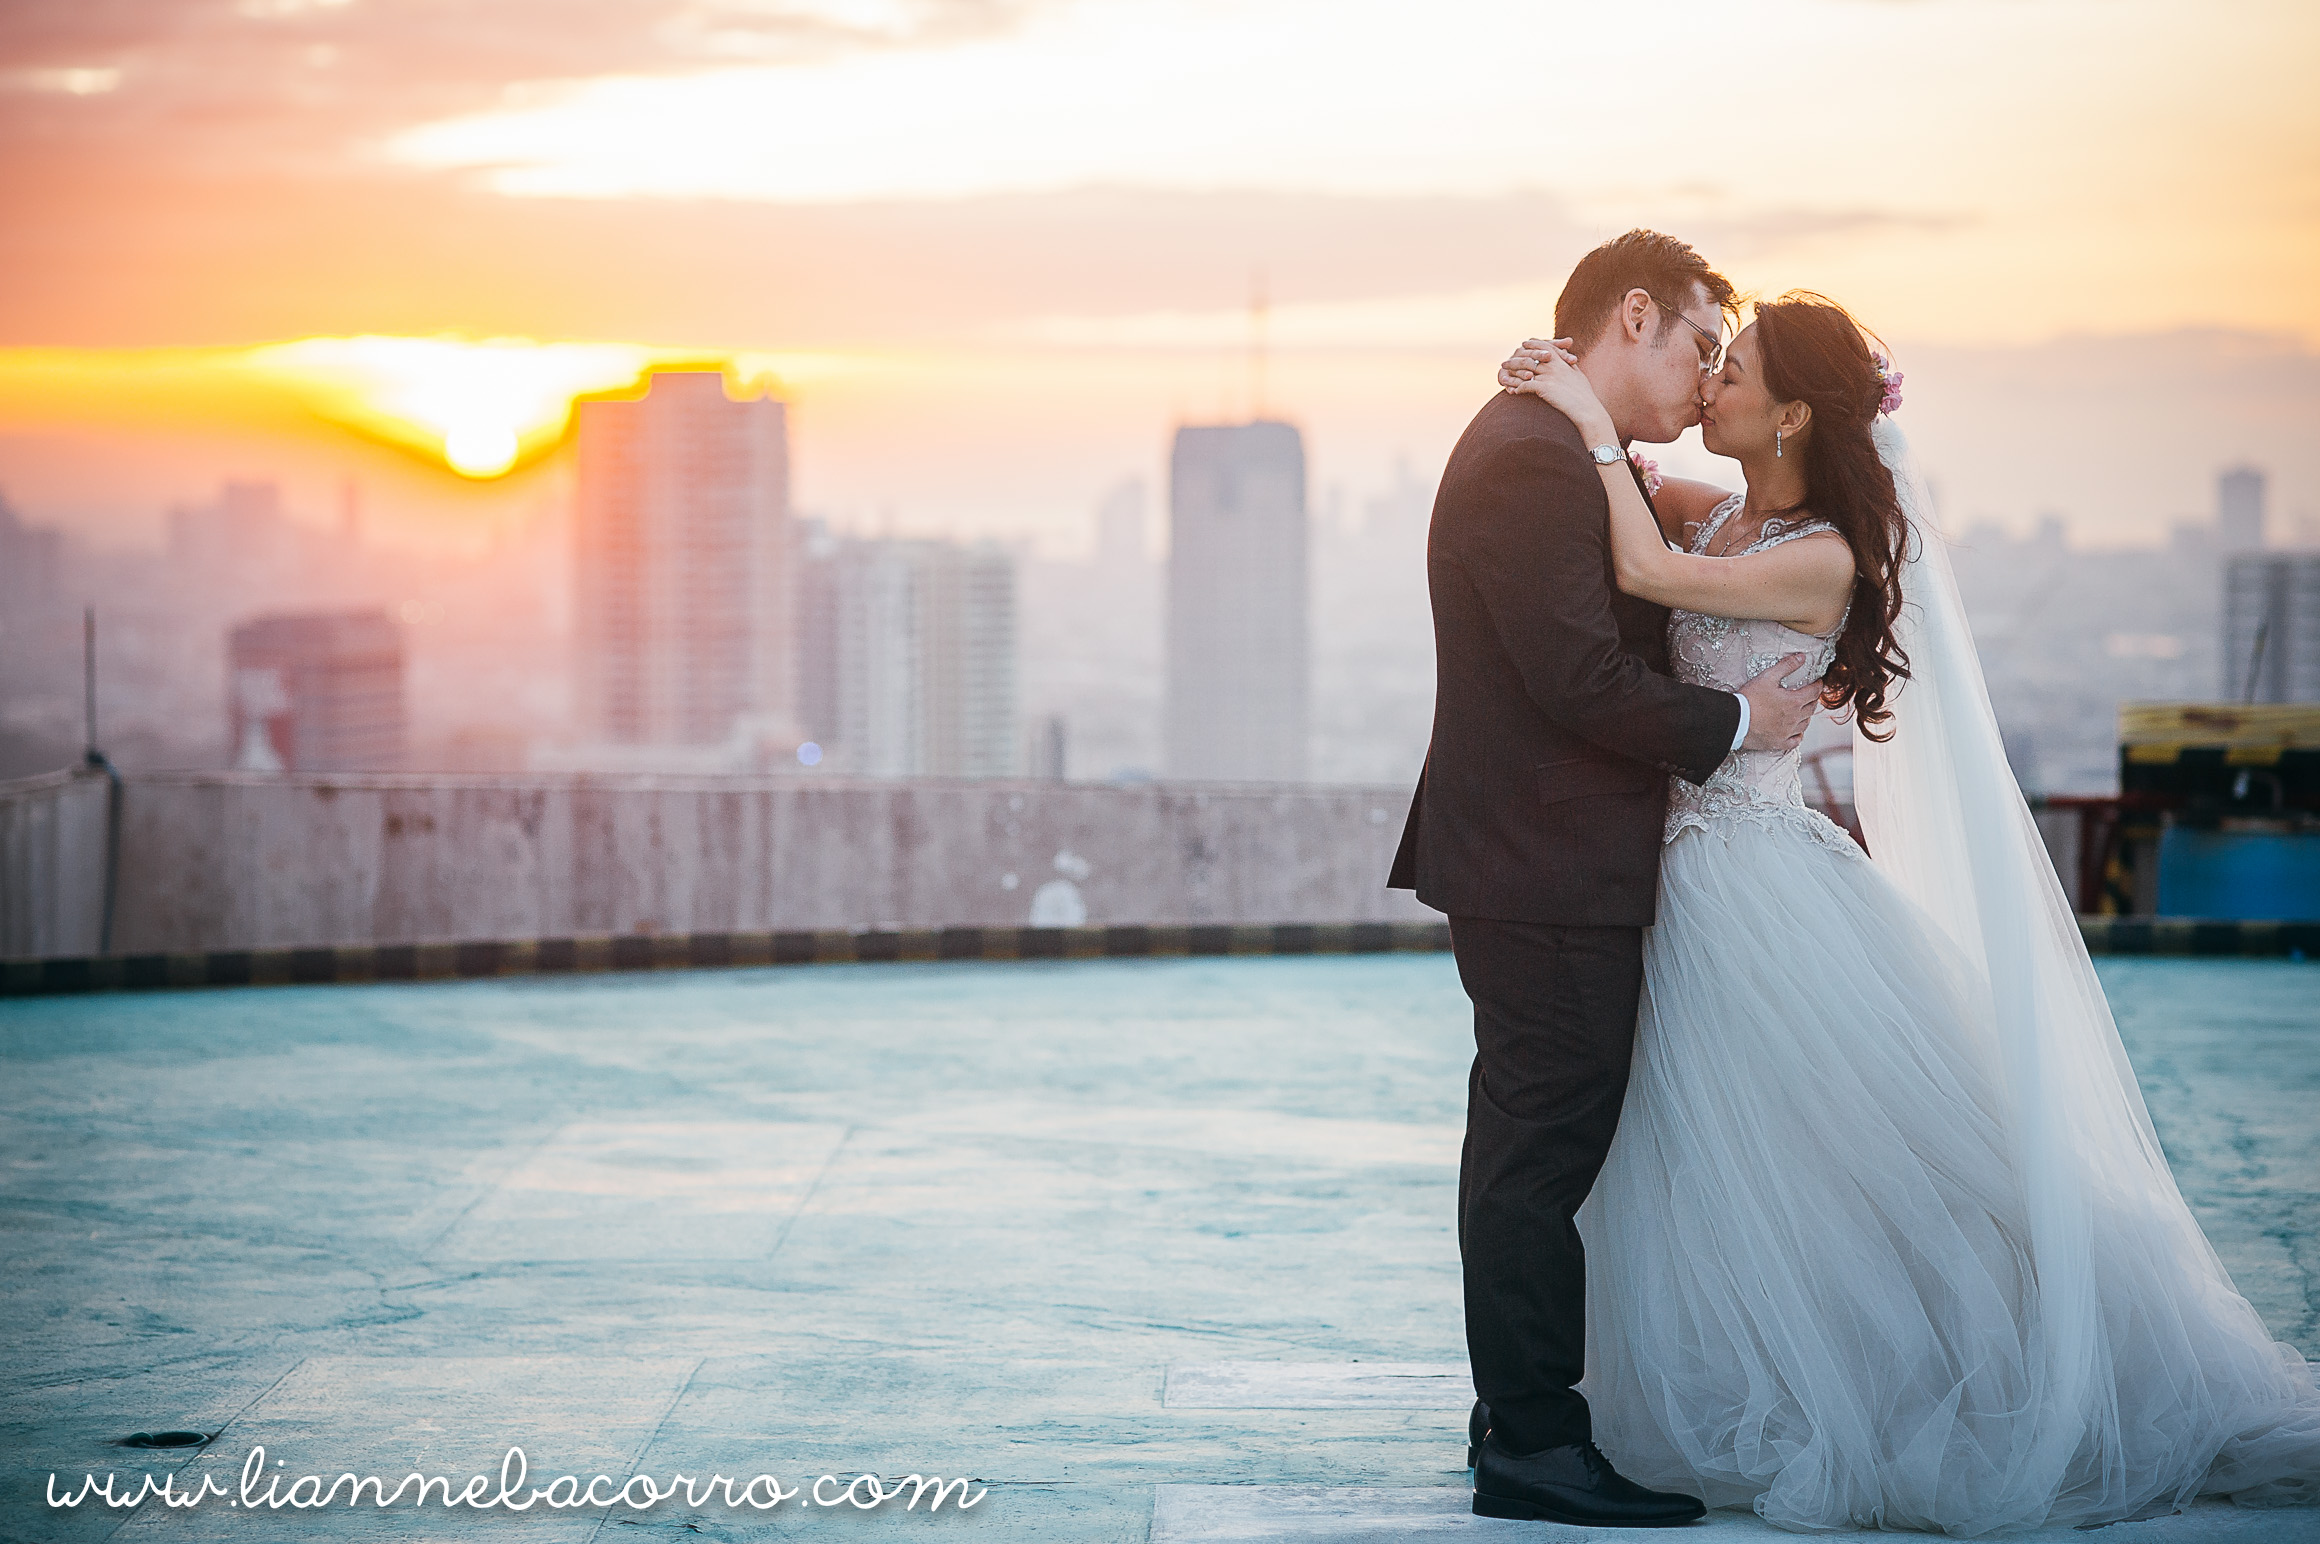 Dem and Kyra - Wedding Photography by Lianne Bacorro - Dan Rivera Photography-56